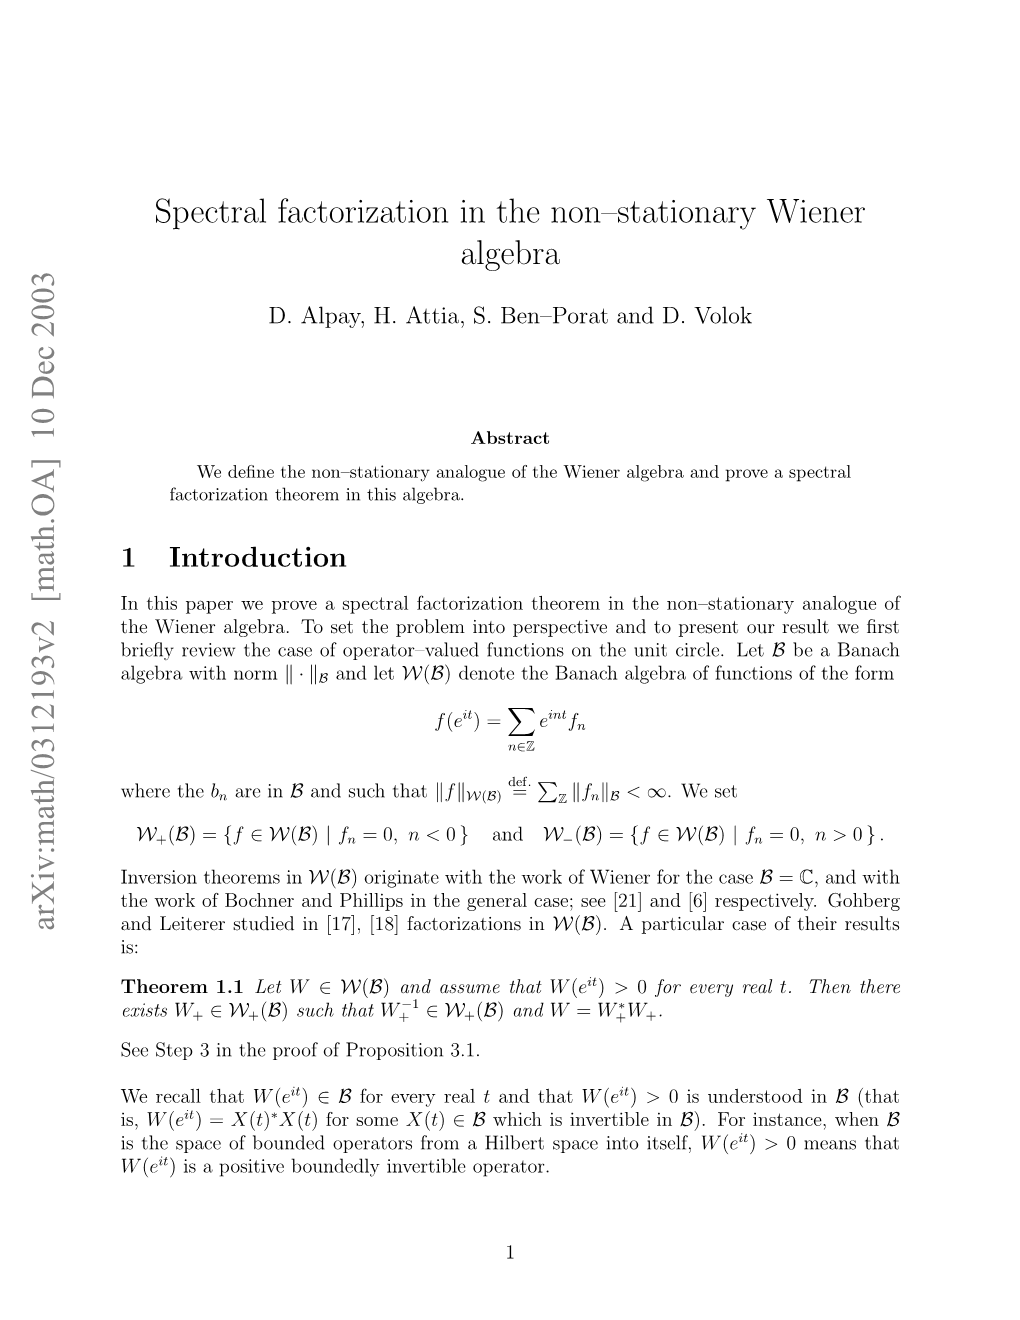 Spectral Factorization in the Non–Stationary Wiener Algebra